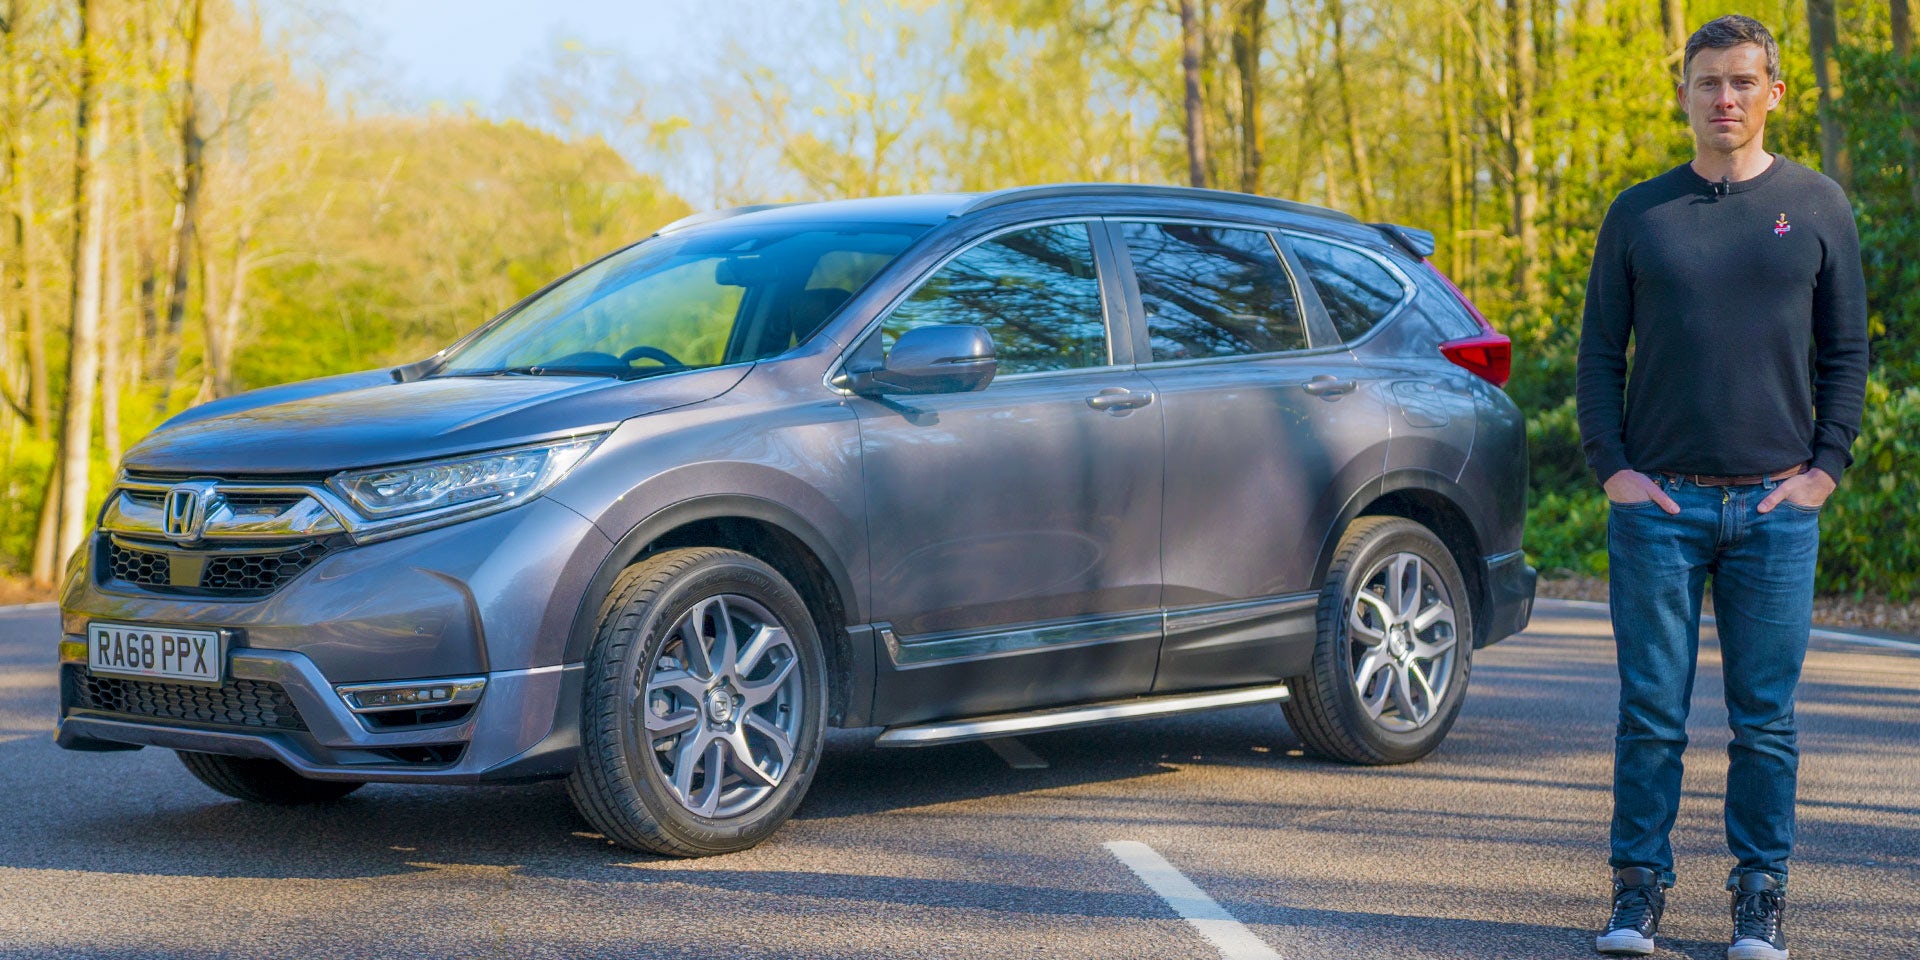 Honda CRV Review 2022 Drive, Specs & Pricing carwow